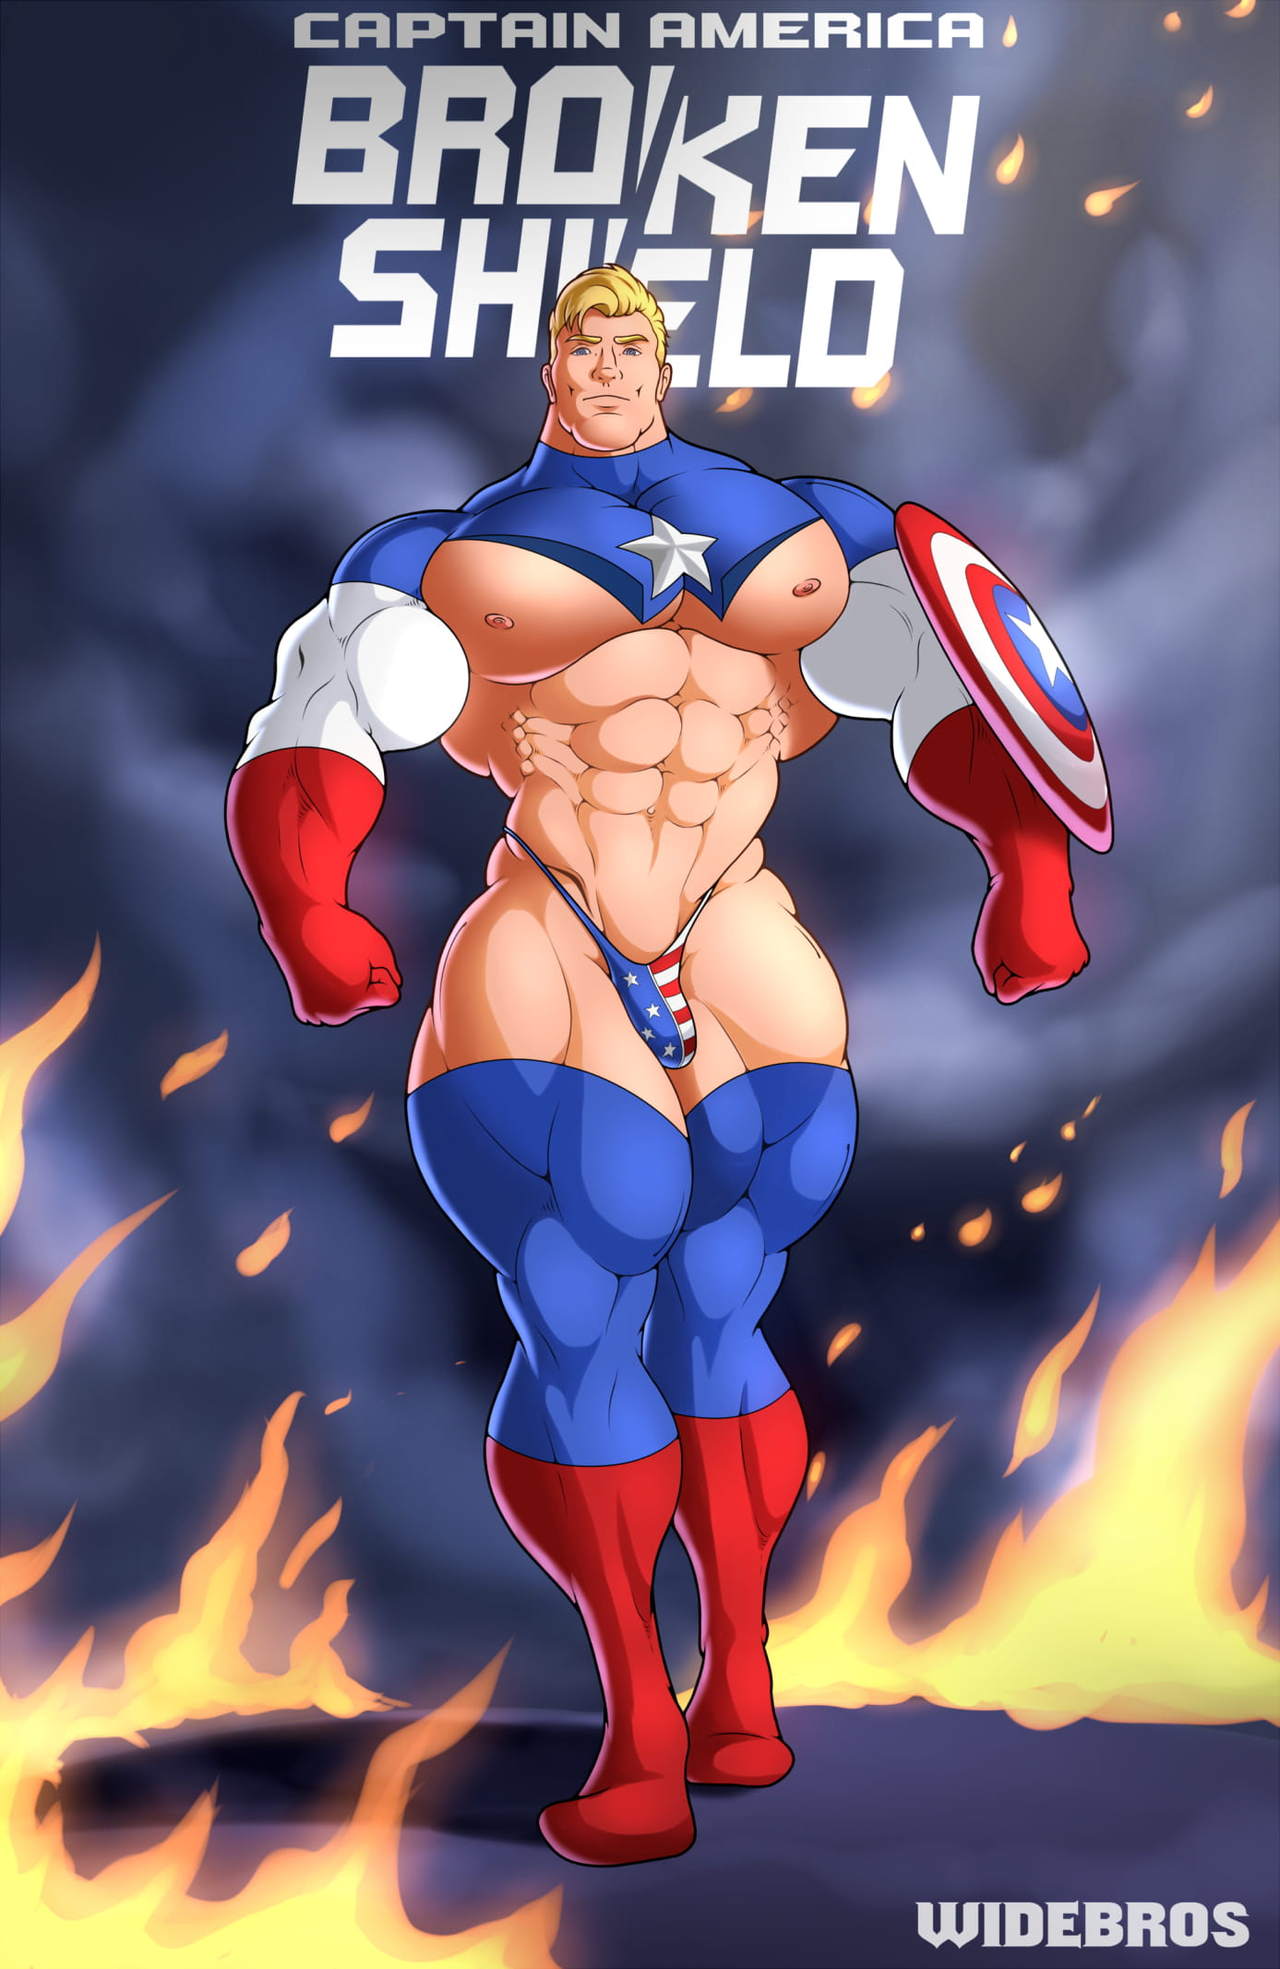 Avengers captain america porn comic